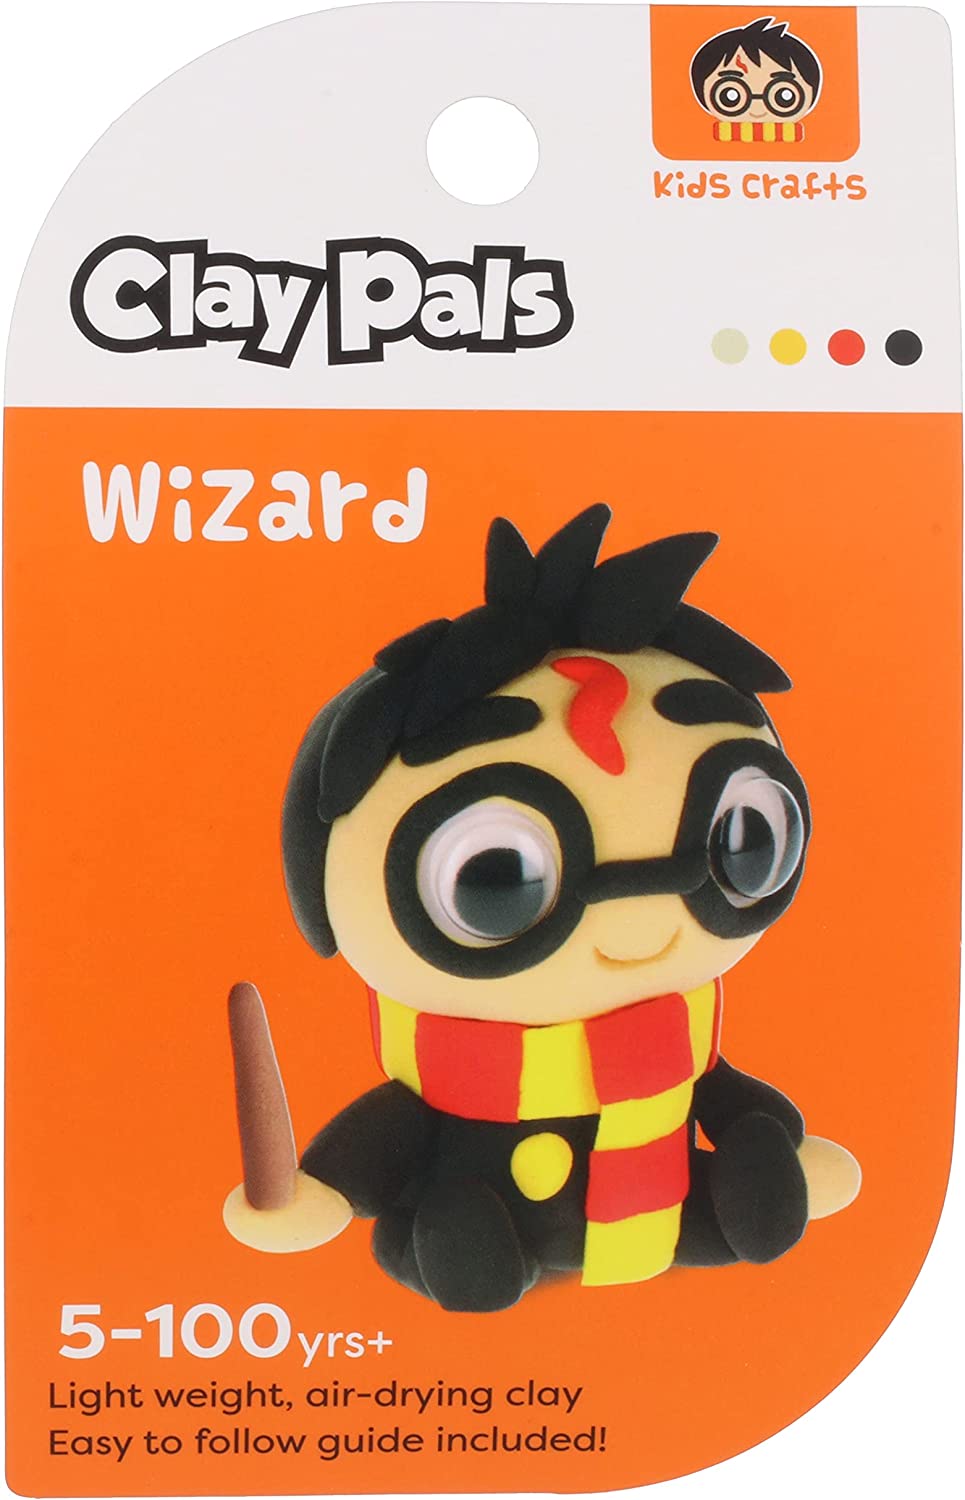 Clay pals model [Wizard]